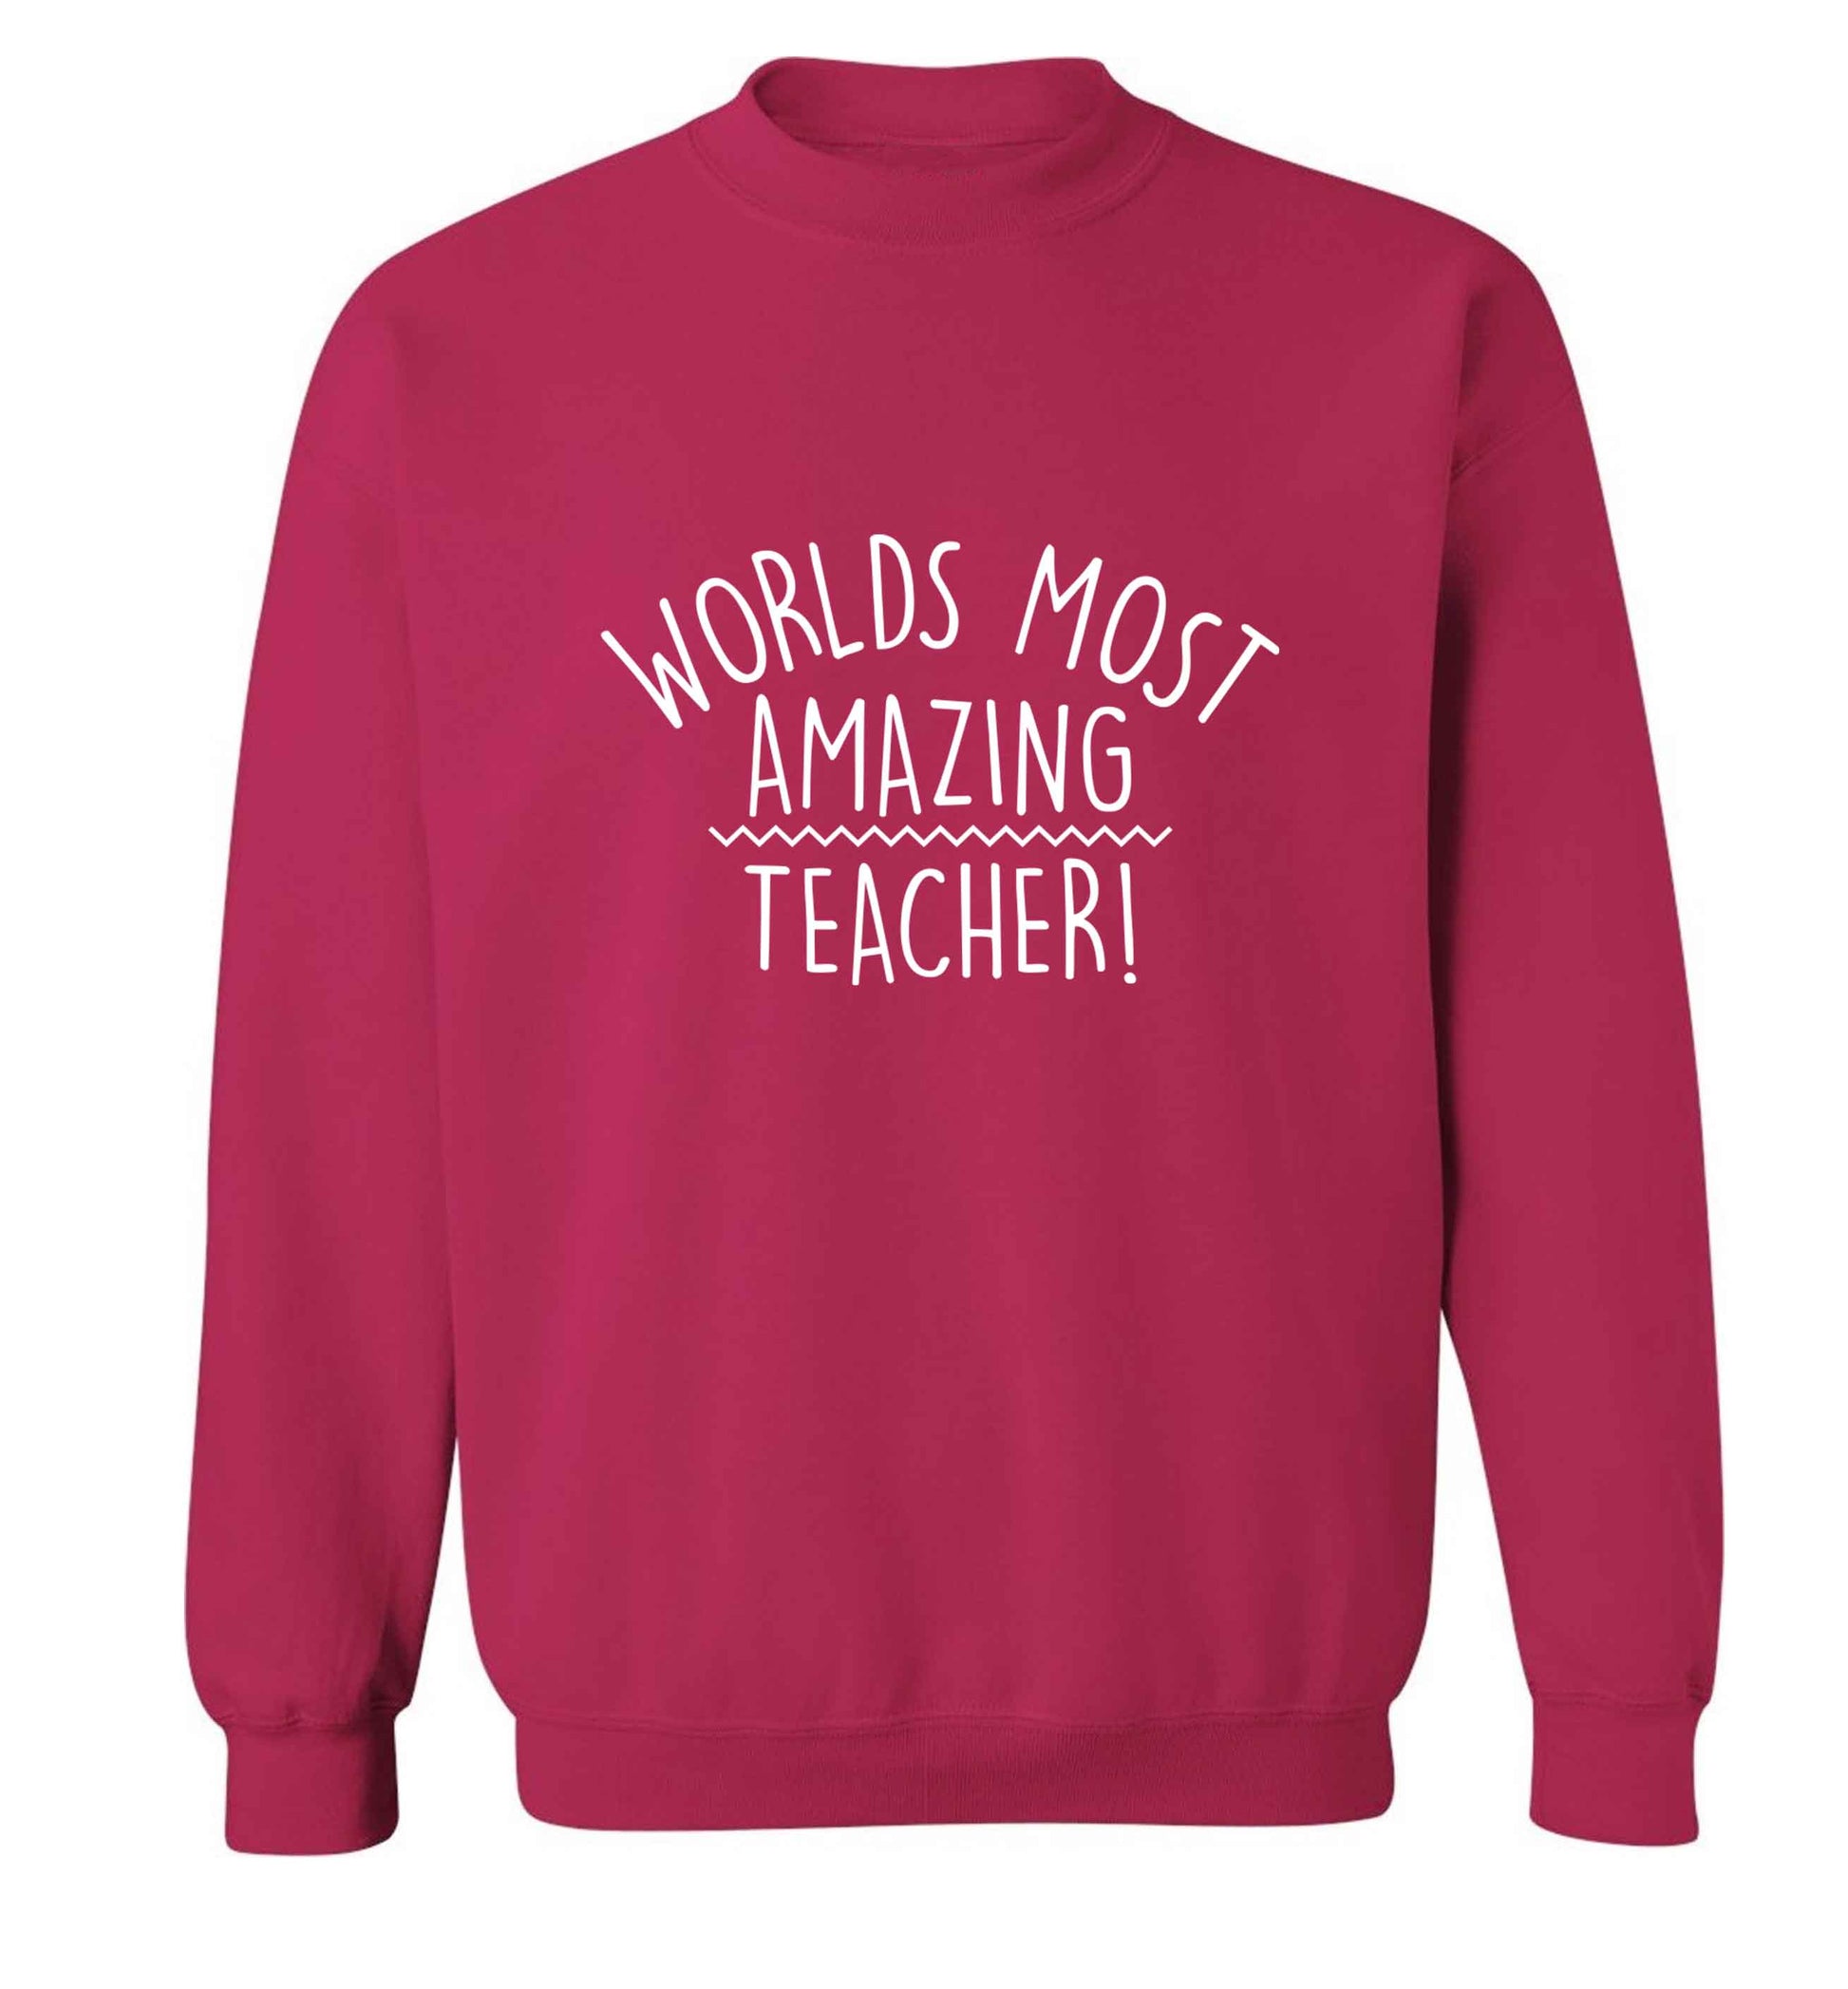 Worlds most amazing teacher adult's unisex pink sweater 2XL